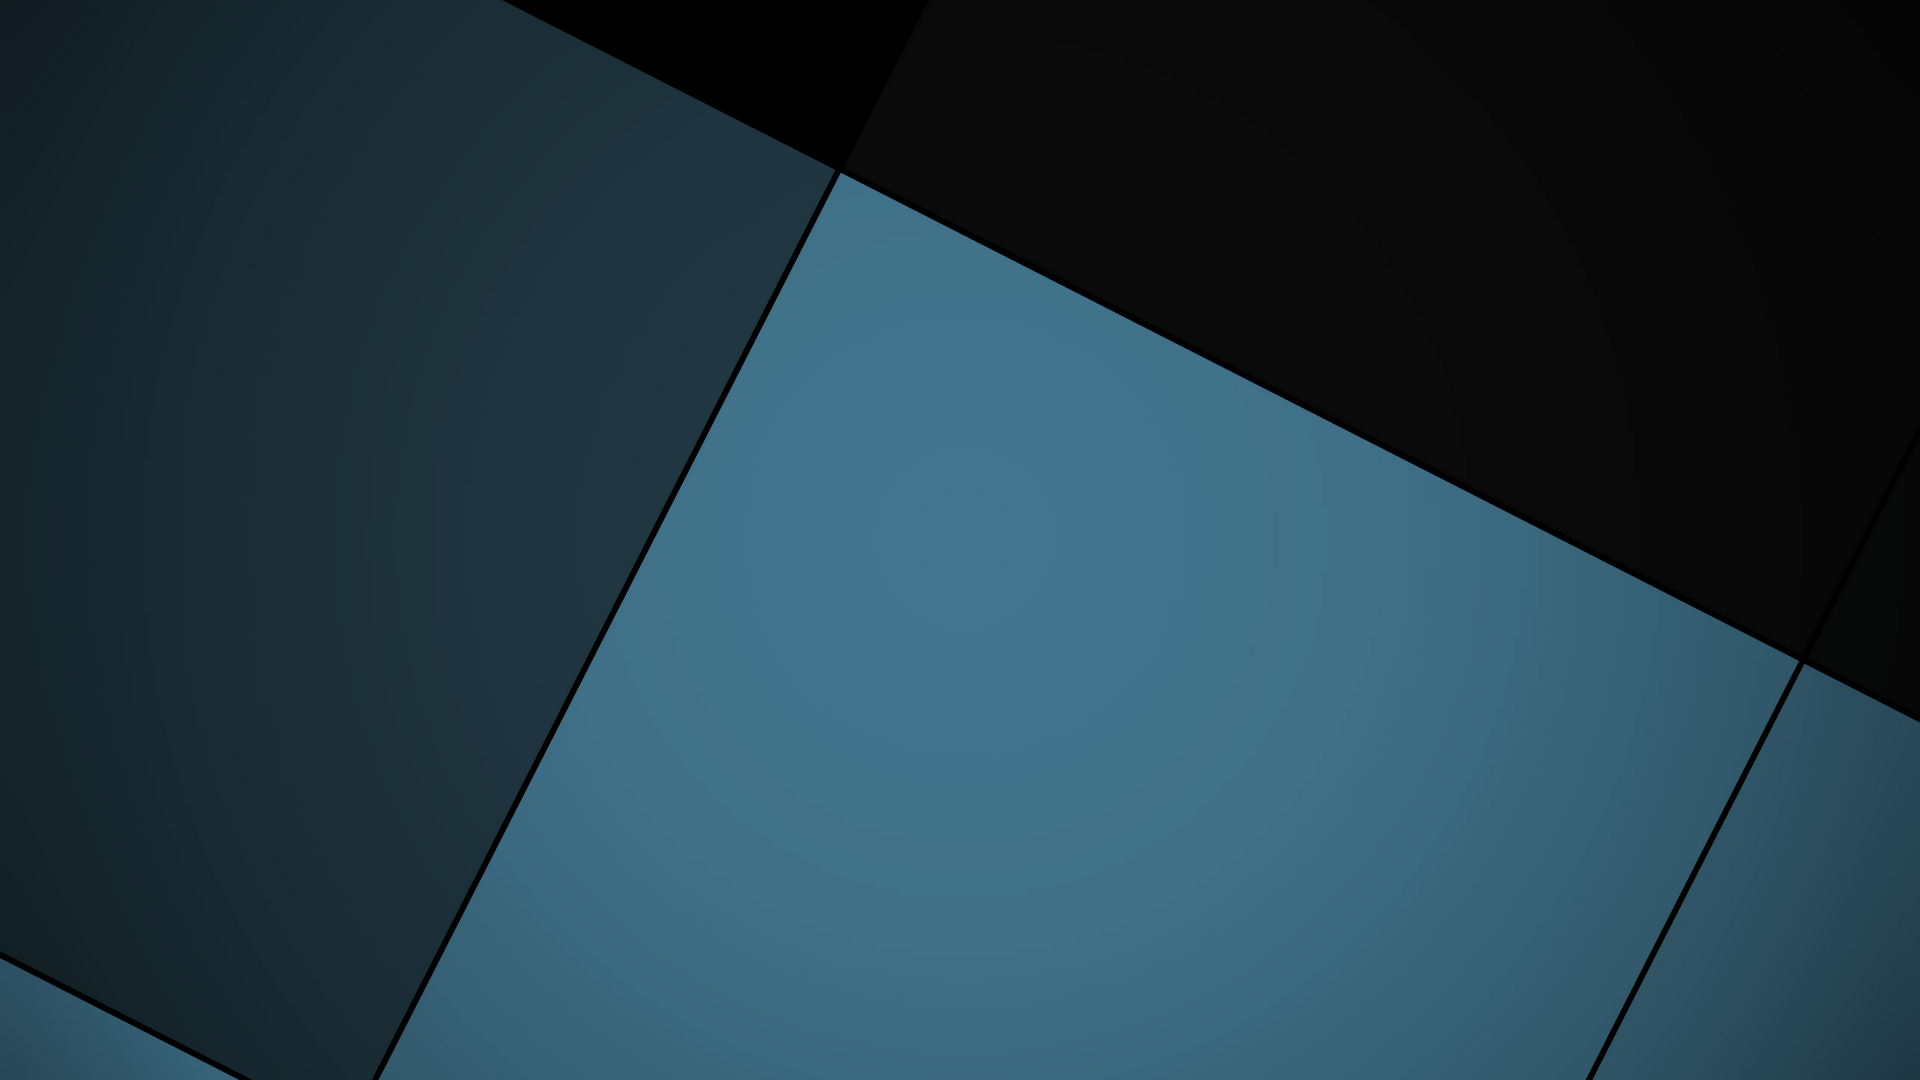 material design wallpapers desktop,blue,azure,turquoise,line,architecture